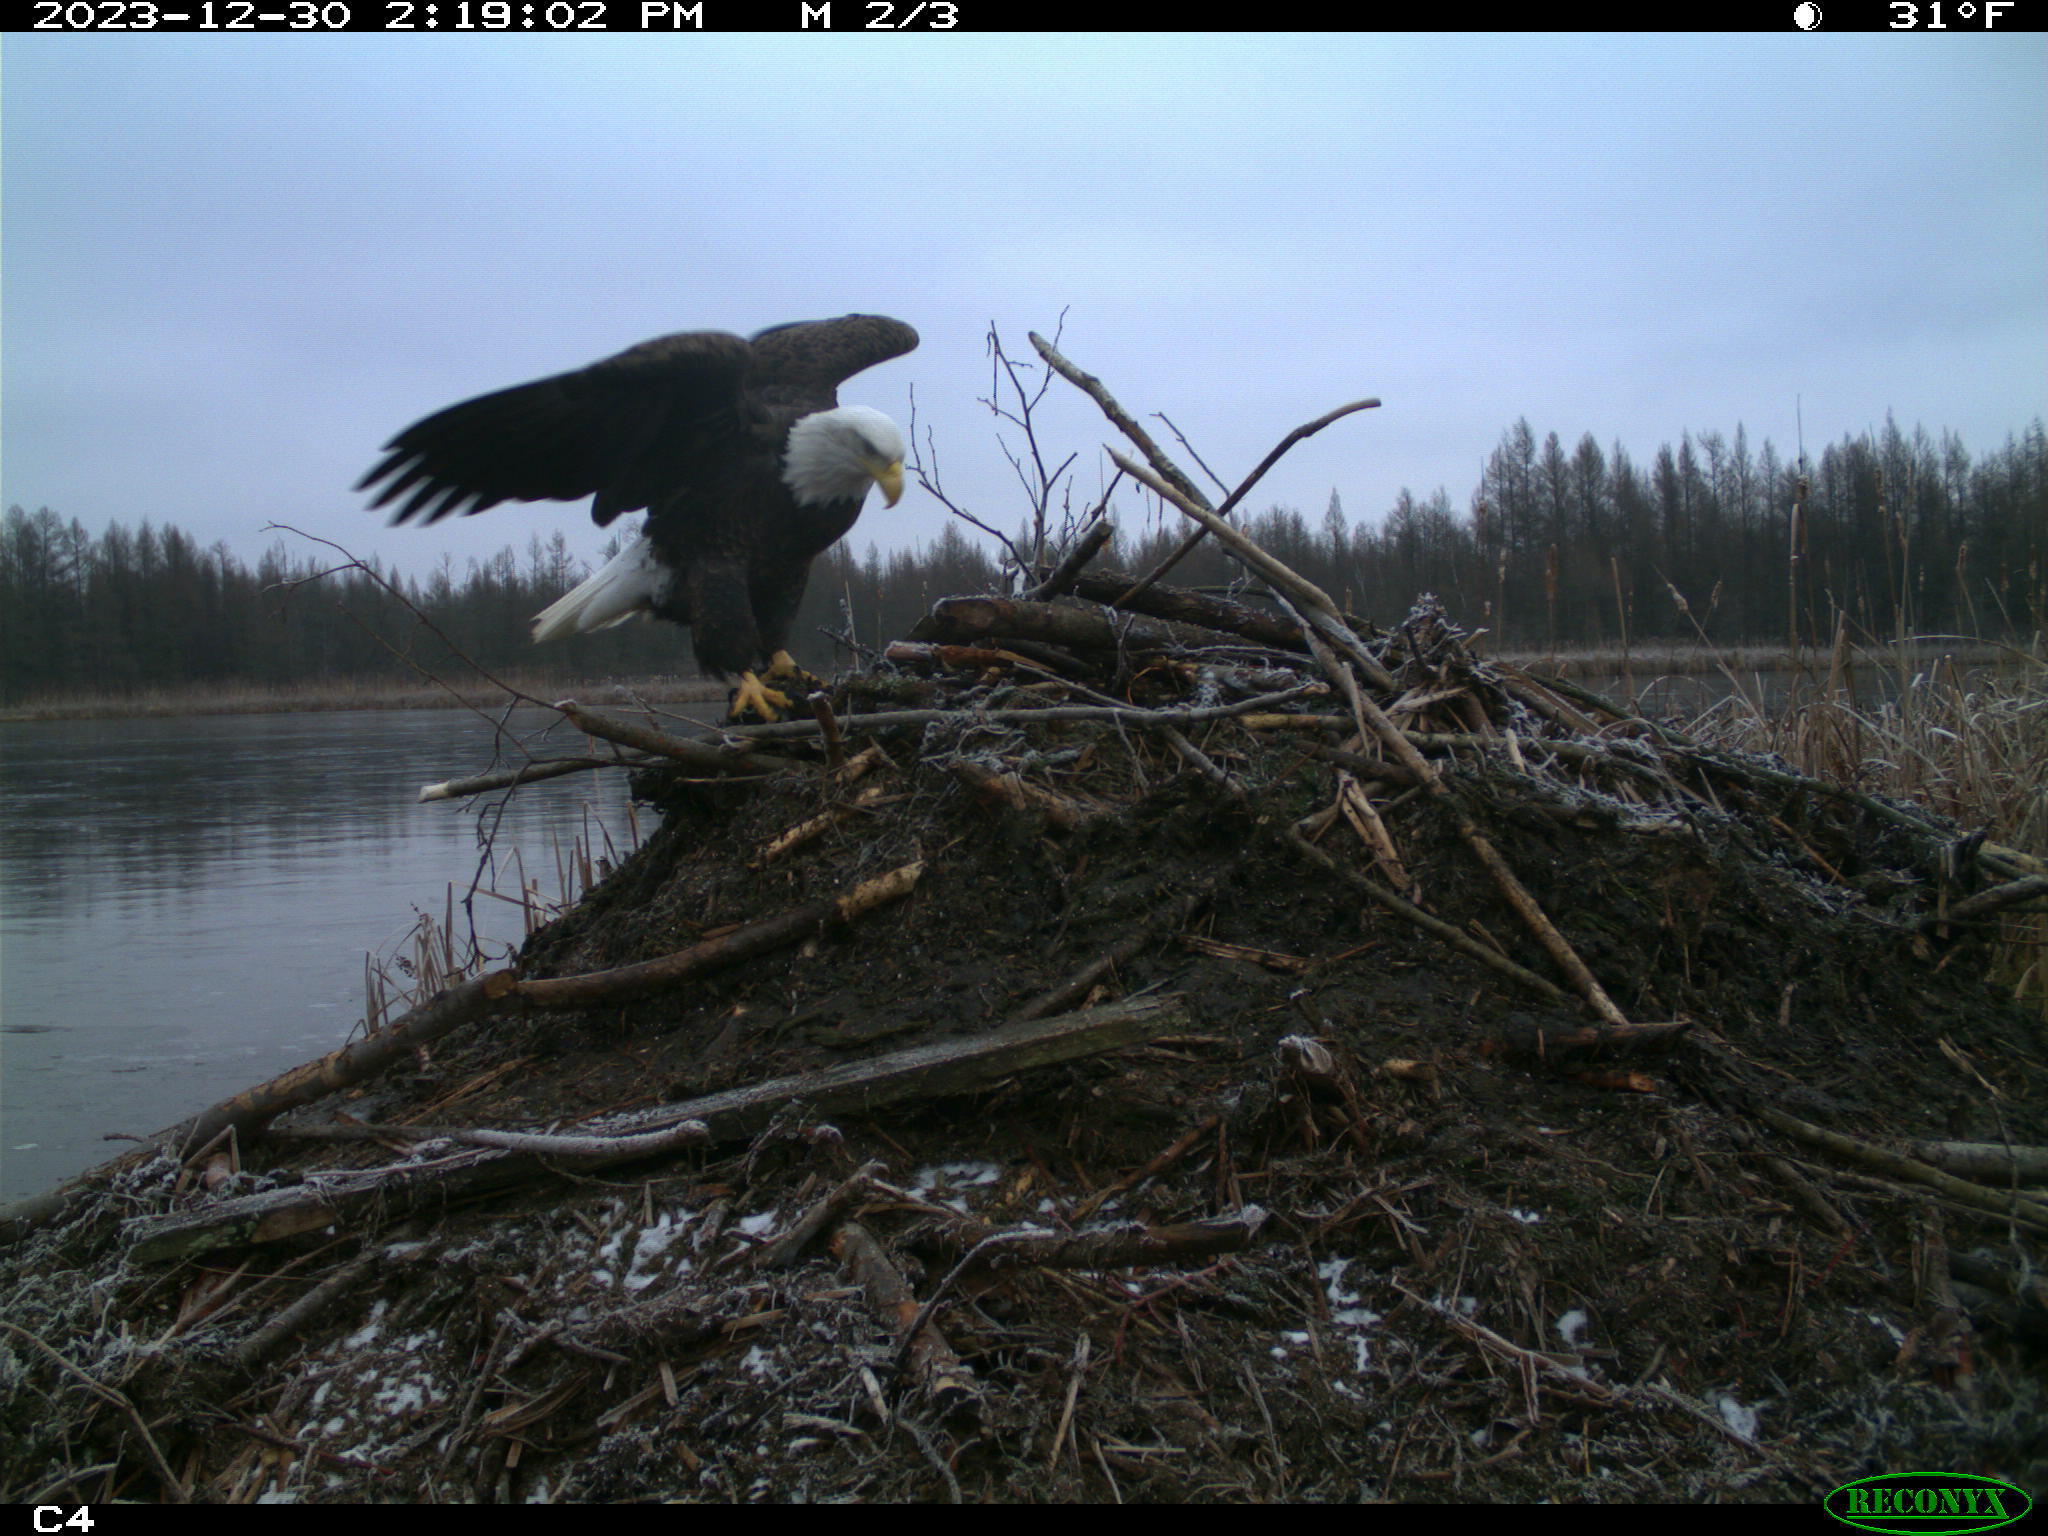 A bald eagle perching on a beaver dam